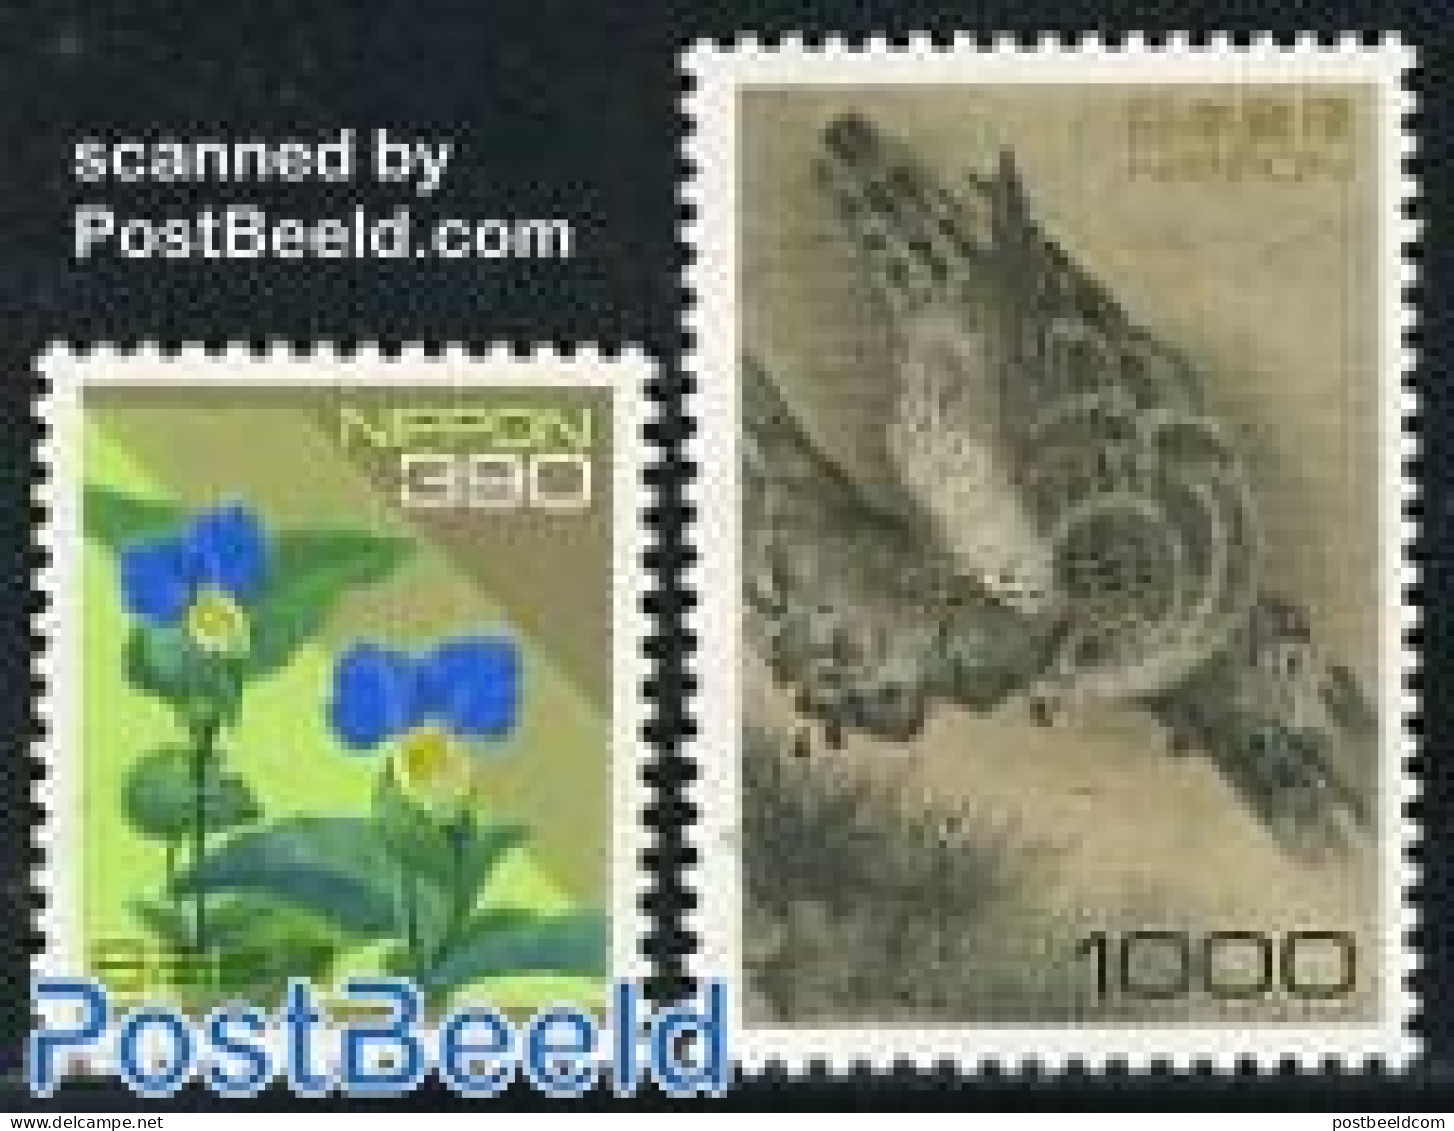 Japan 1996 Definitives 2v, Mint NH, Nature - Birds - Flowers & Plants - Unused Stamps